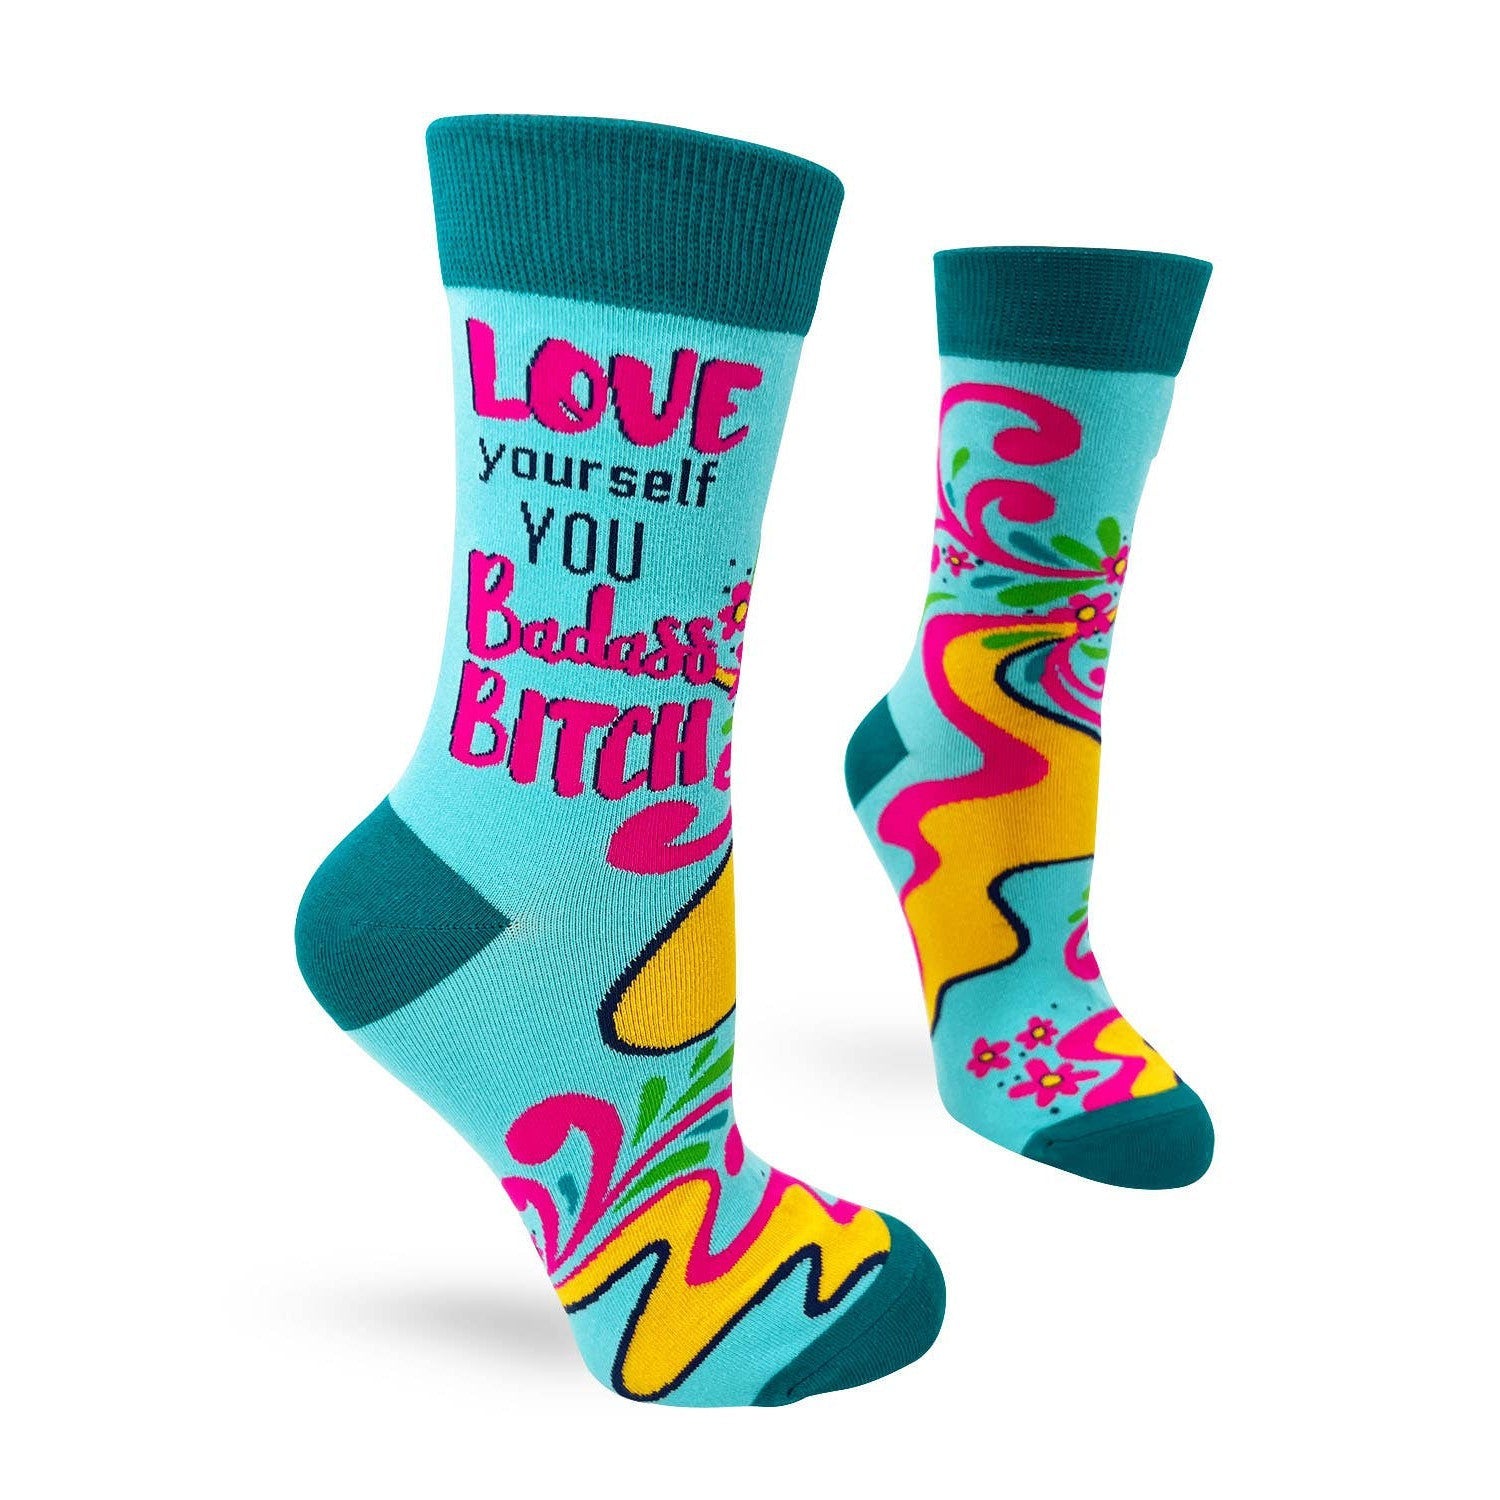 Love Yourself You Badass Bitch Ladies' Novelty Crew Socks | Colorful Women's Footwear